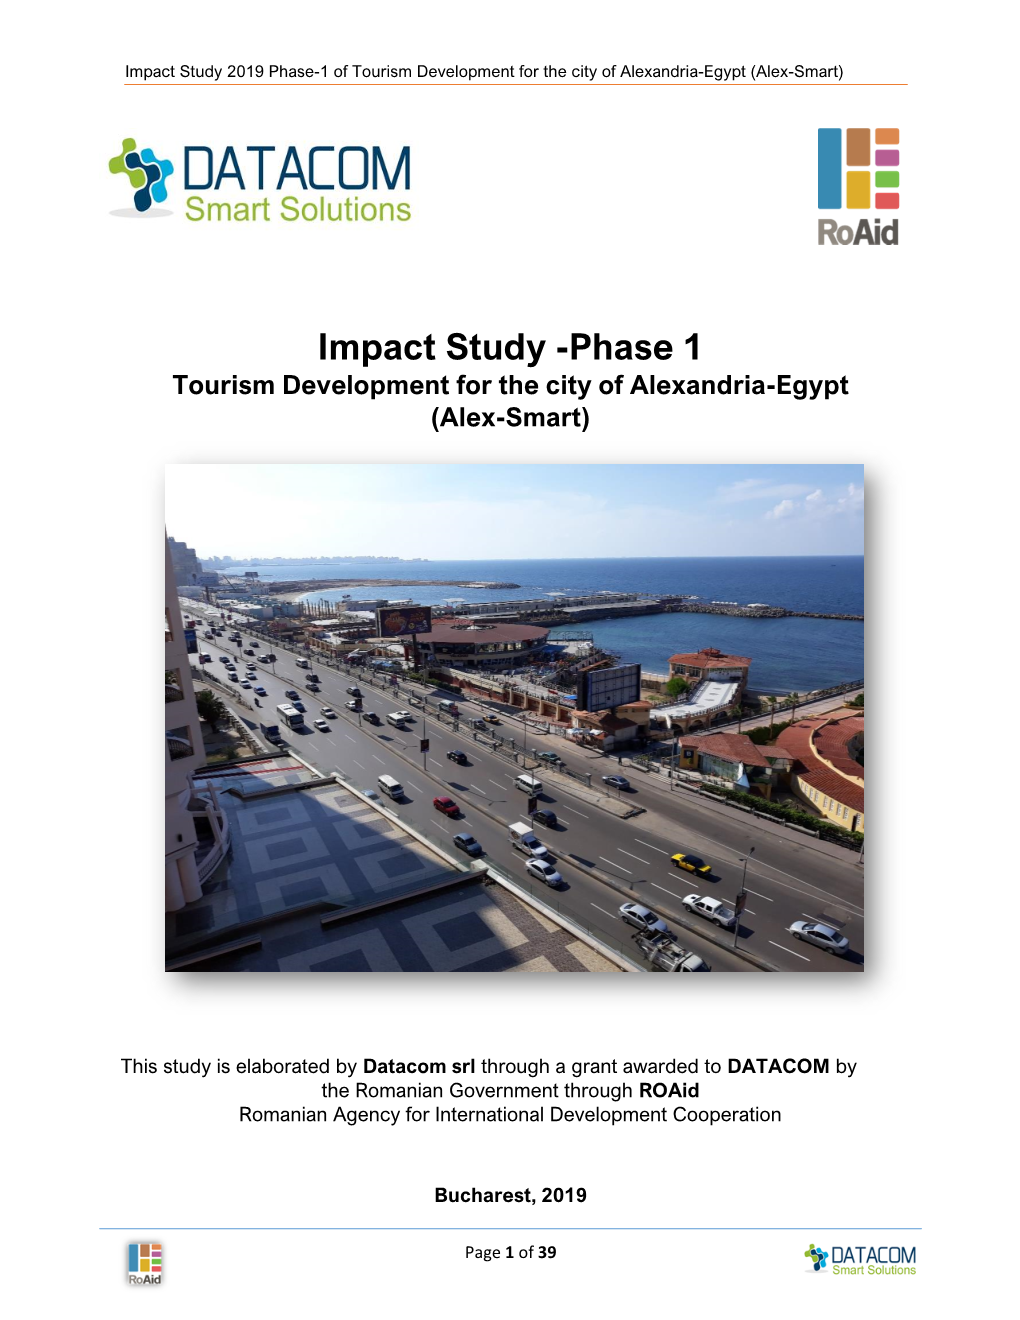 Impact Study -Phase 1 Tourism Development for the City of Alexandria-Egypt (Alex-Smart)